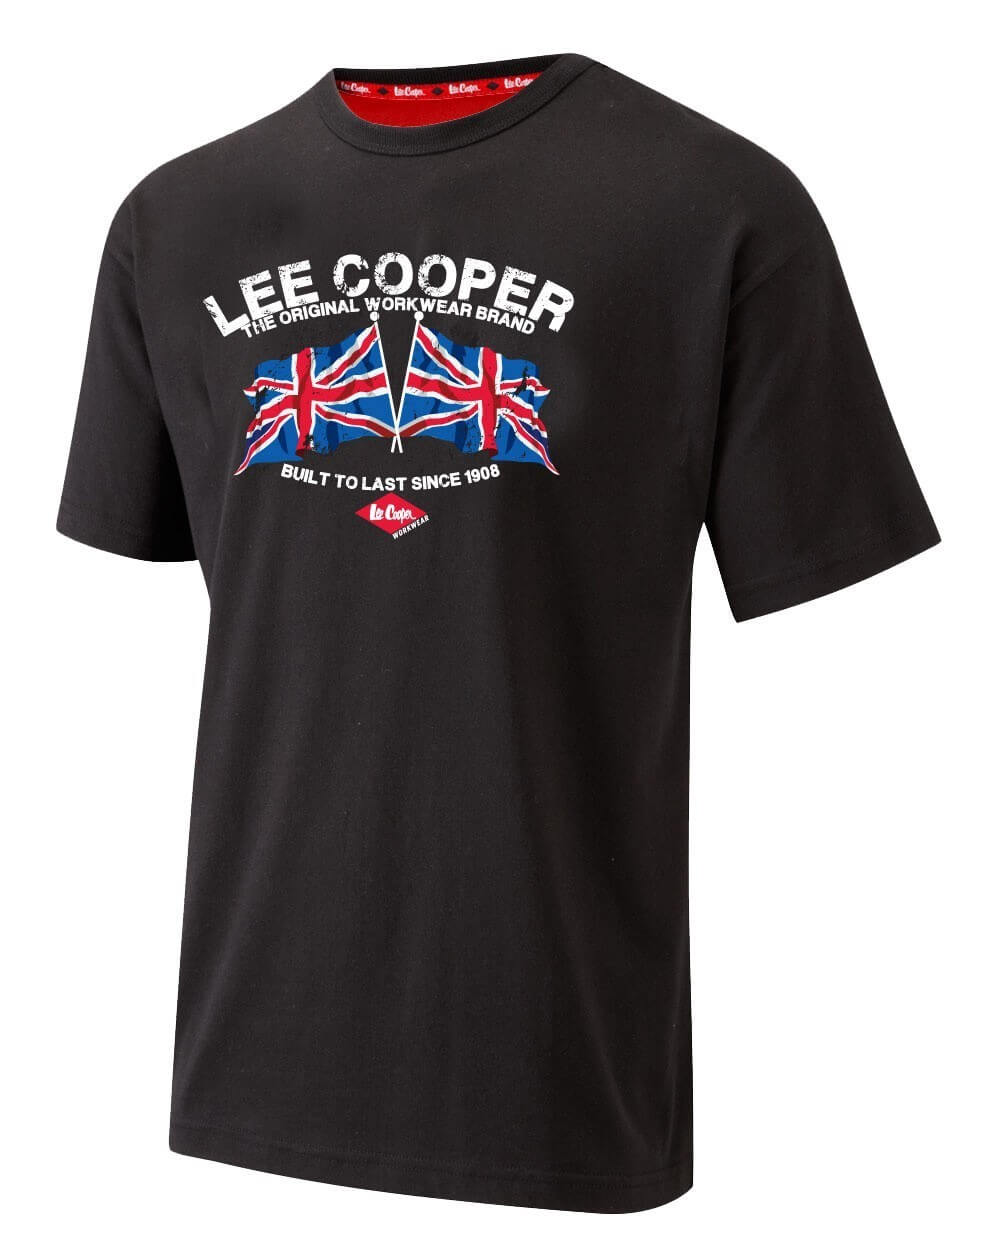 Tee shirt homme manches courtes noir Lee Cooper cotepro